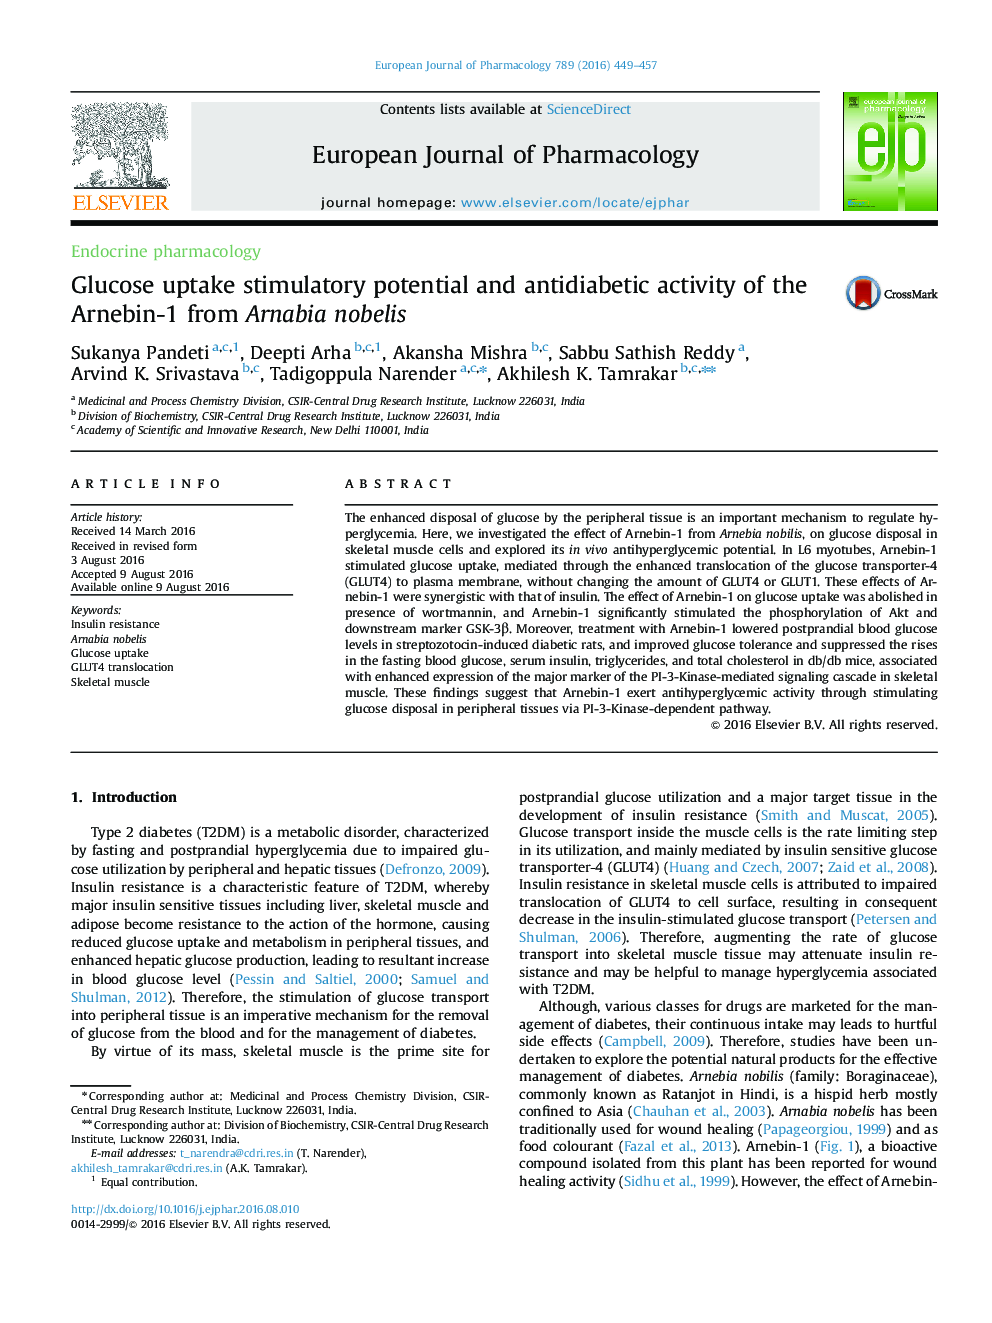 Glucose uptake stimulatory potential and antidiabetic activity of the Arnebin-1 from Arnabia nobelis